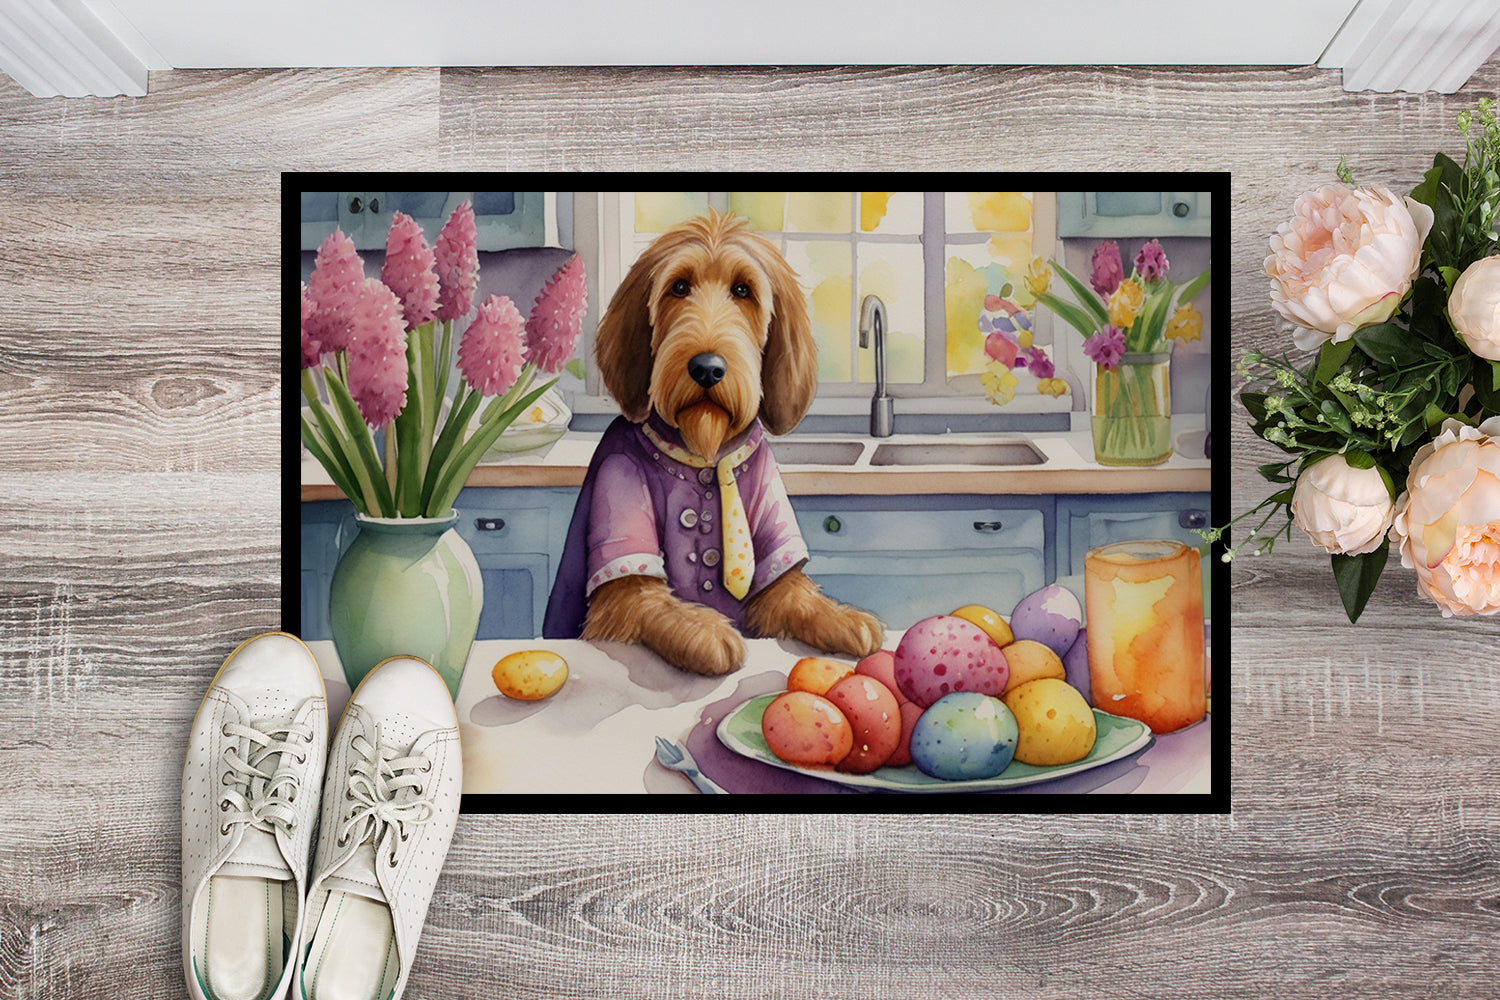 Buy this Decorating Easter Otterhound Doormat